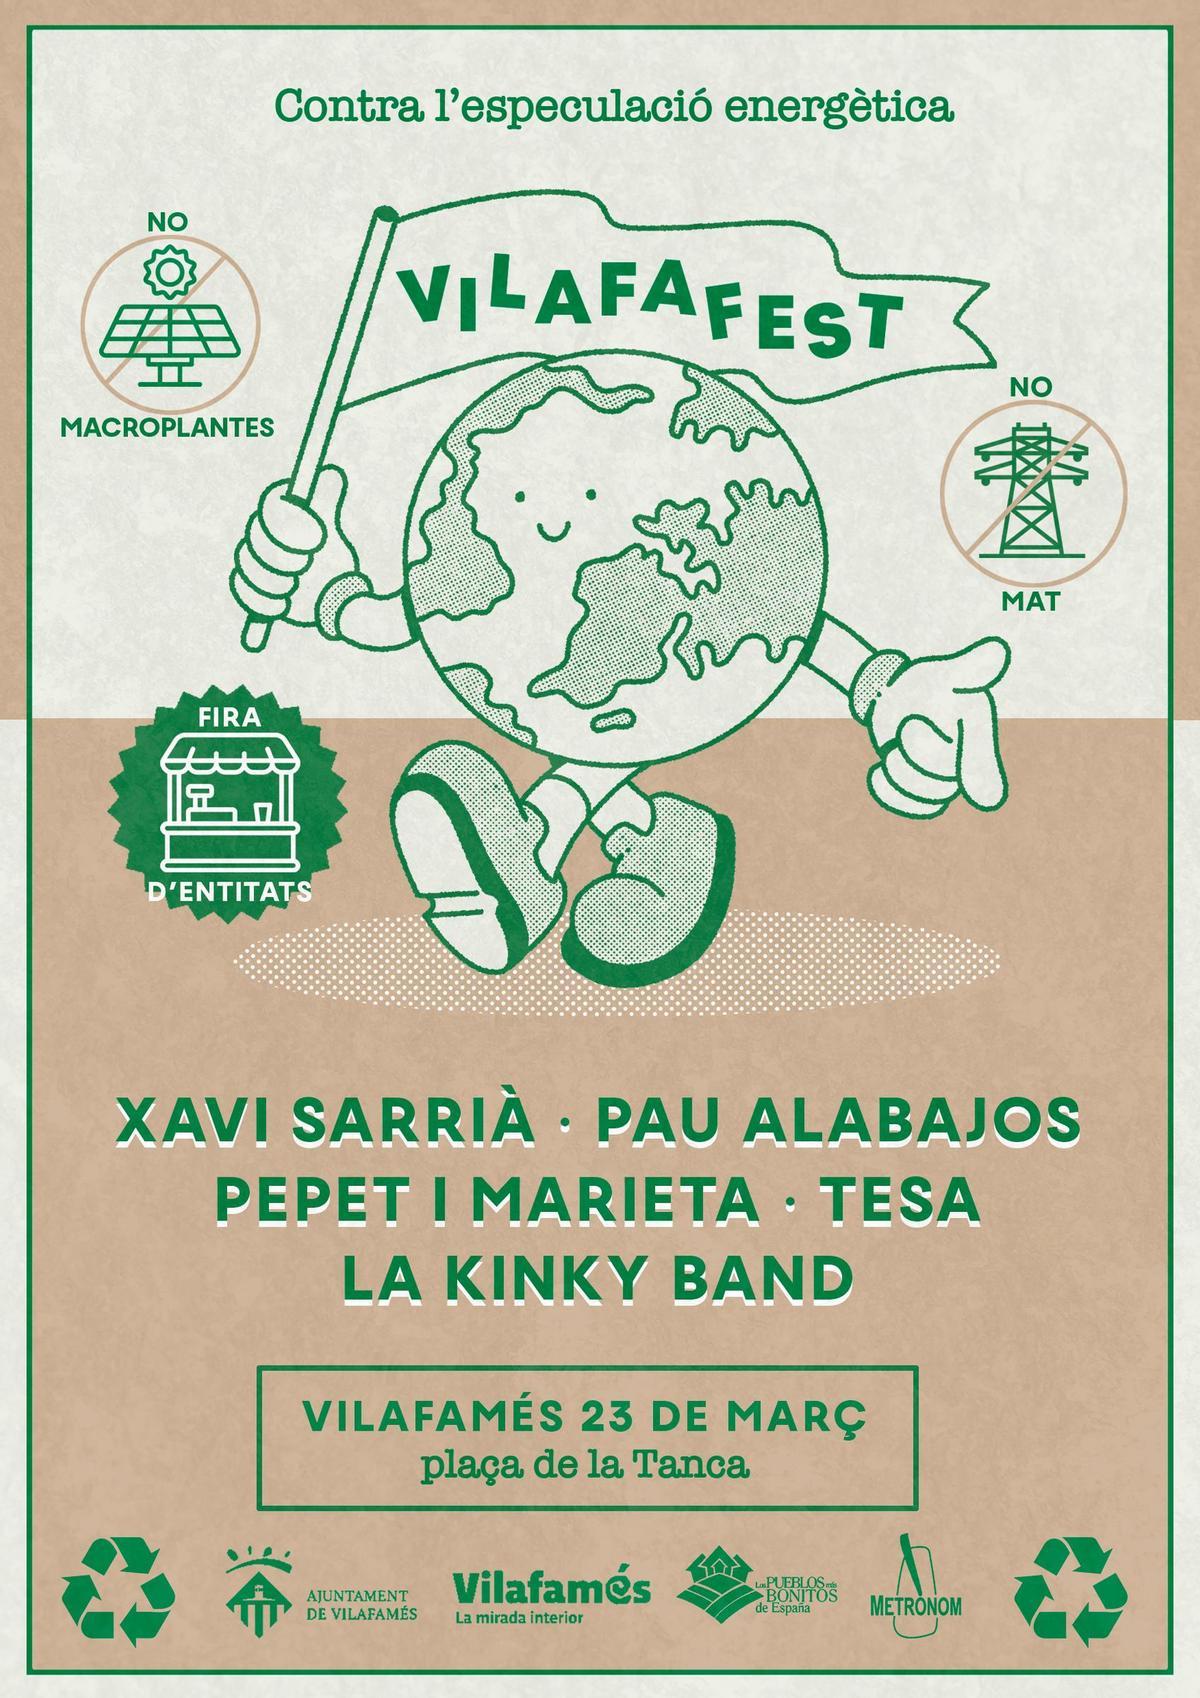 Cartell del Vilafafest.